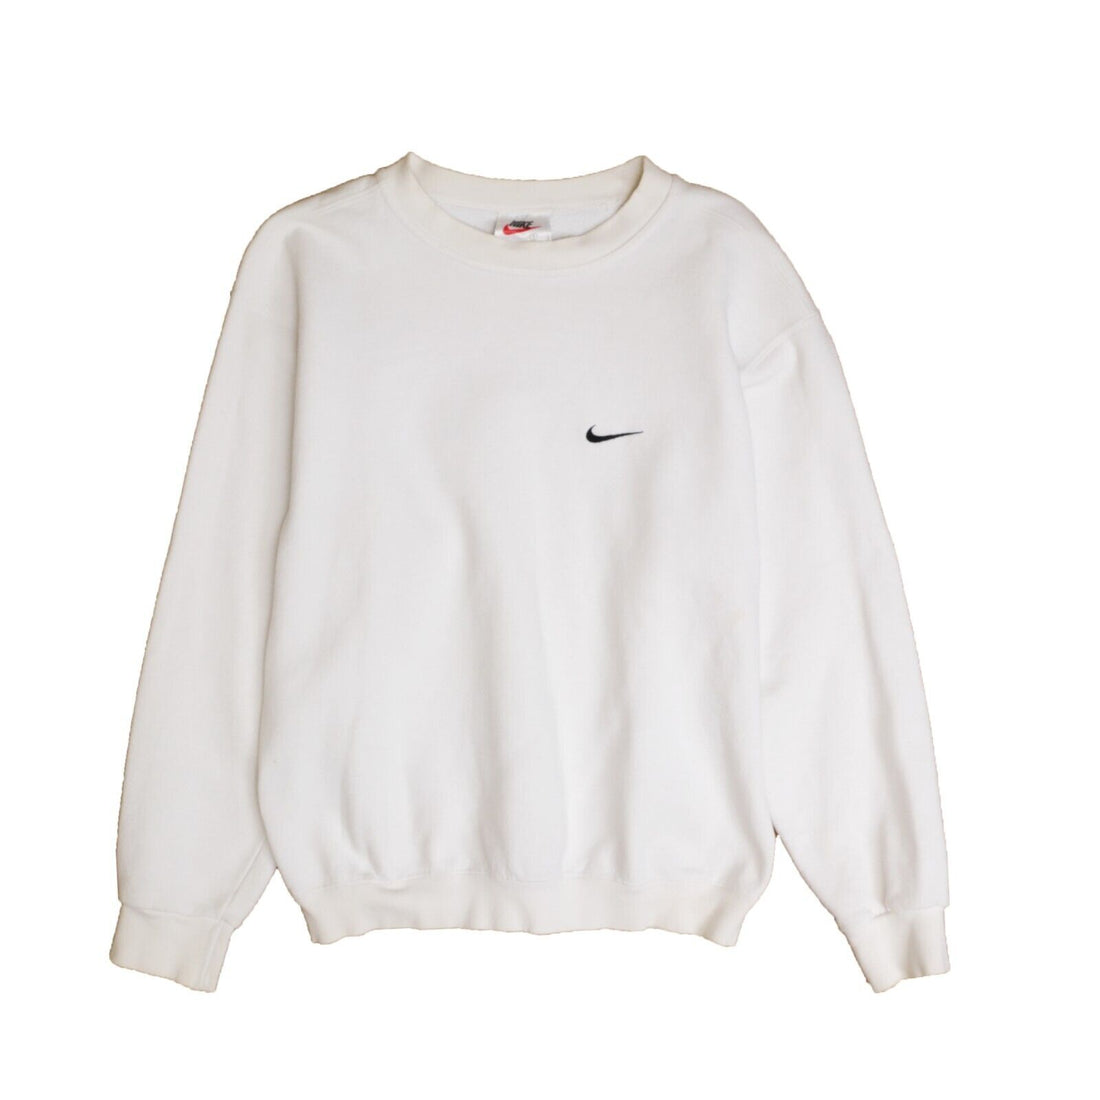 Vintage Nike Sweatshirt Crewneck Size Small White Embroidered Swoosh 90s